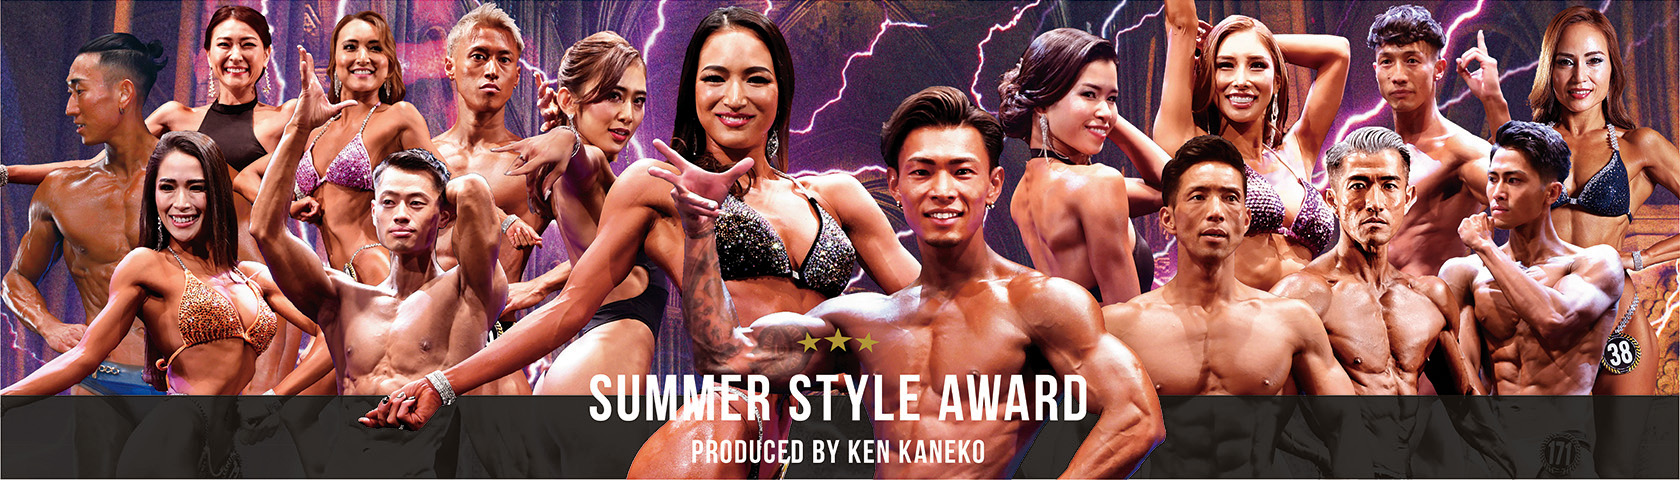 SUMMER STYLE AWARD Produced by KEN KANEKO